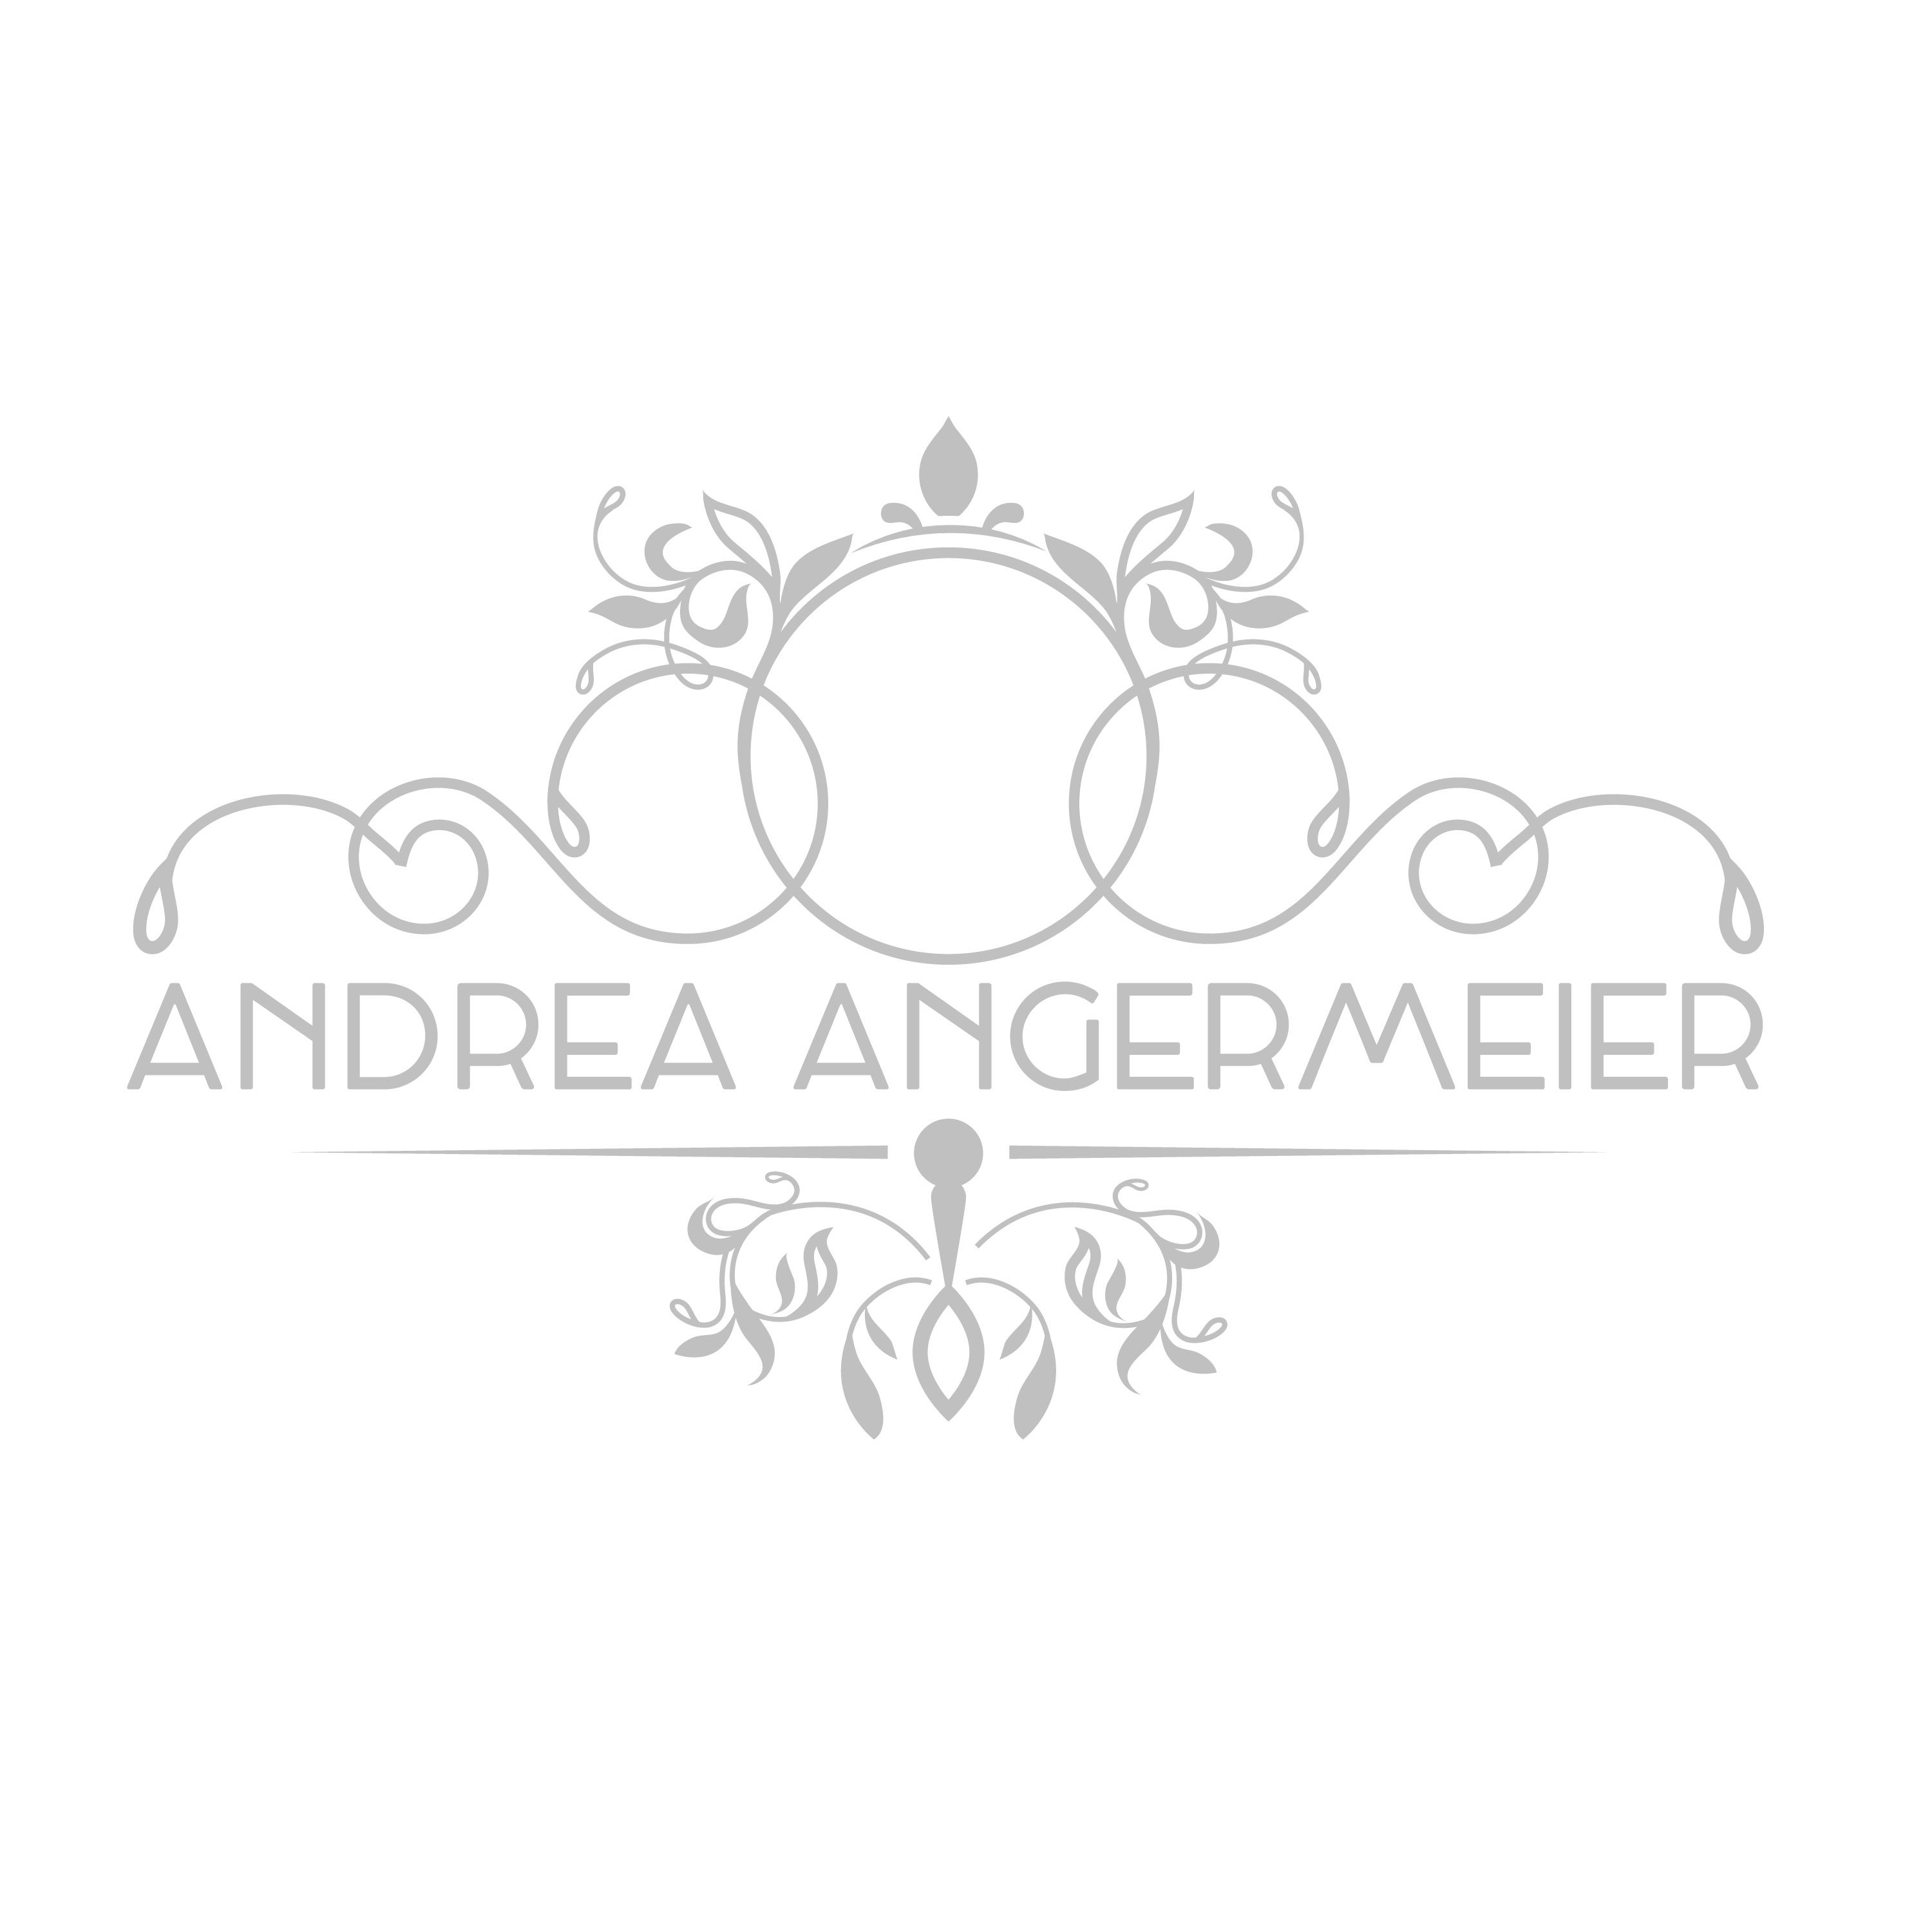 Andrea Angermeier